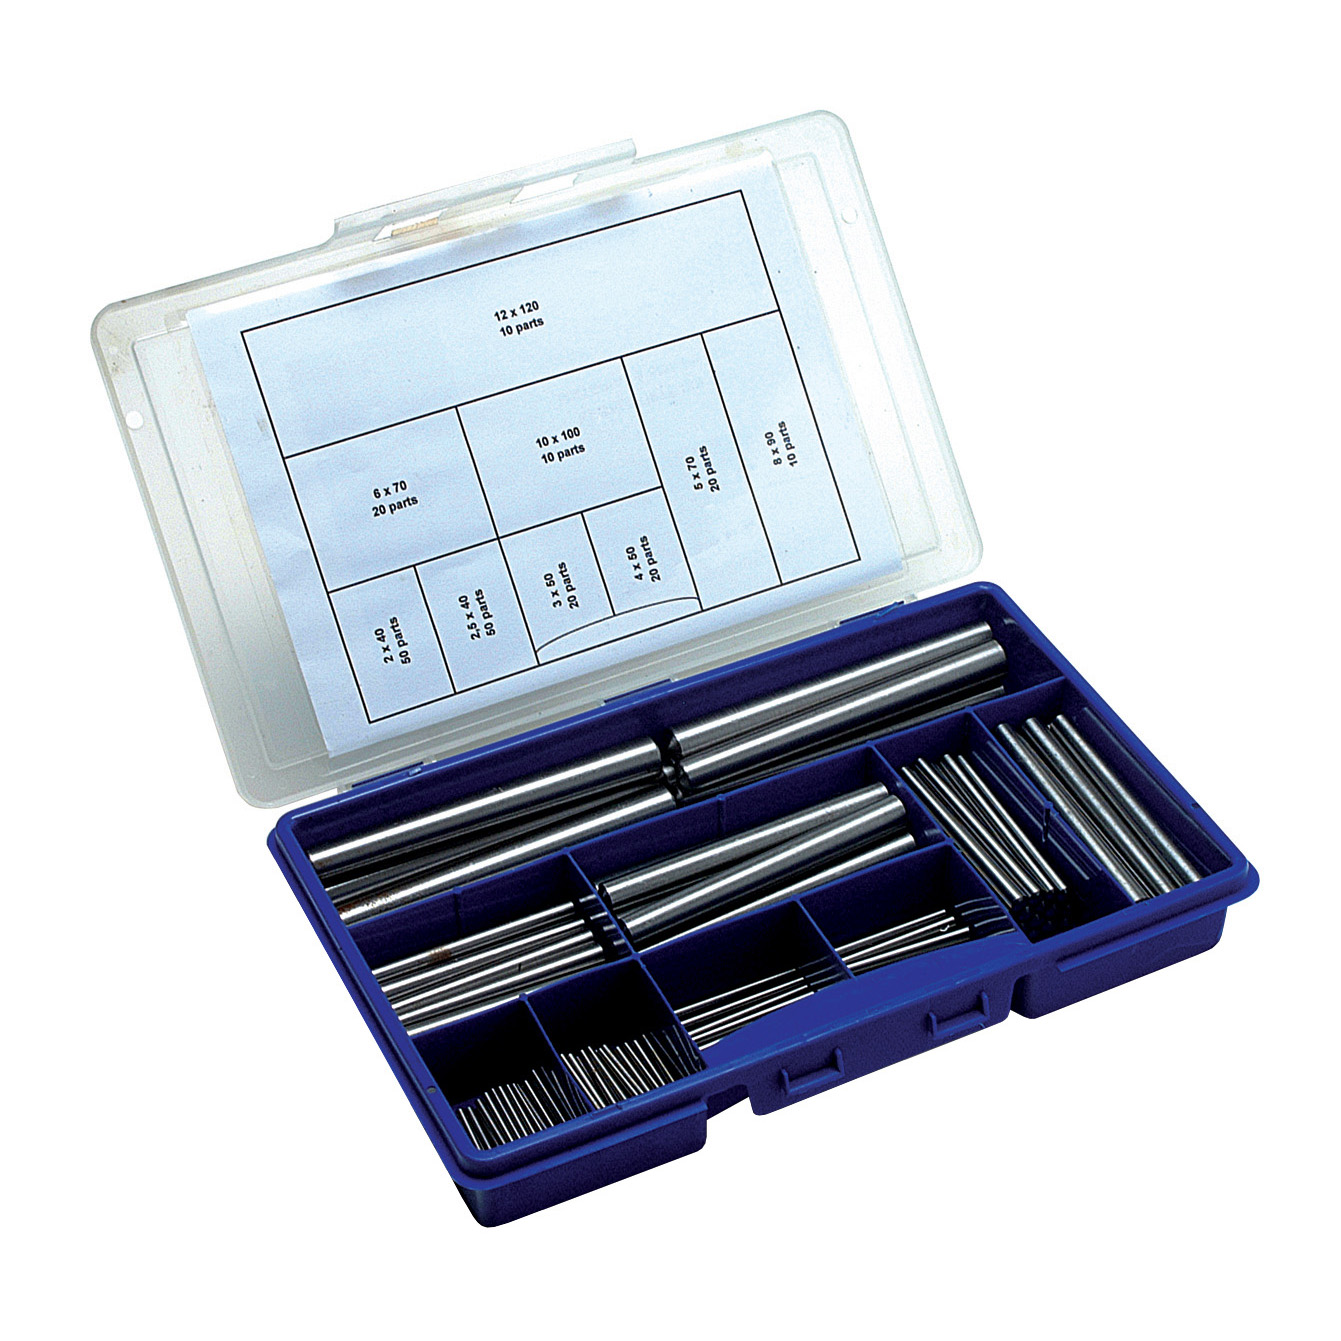 Box kit di spine filettate DIN7979D - Box kit - estraibile DIN 7979D - Acciaio temprato - 